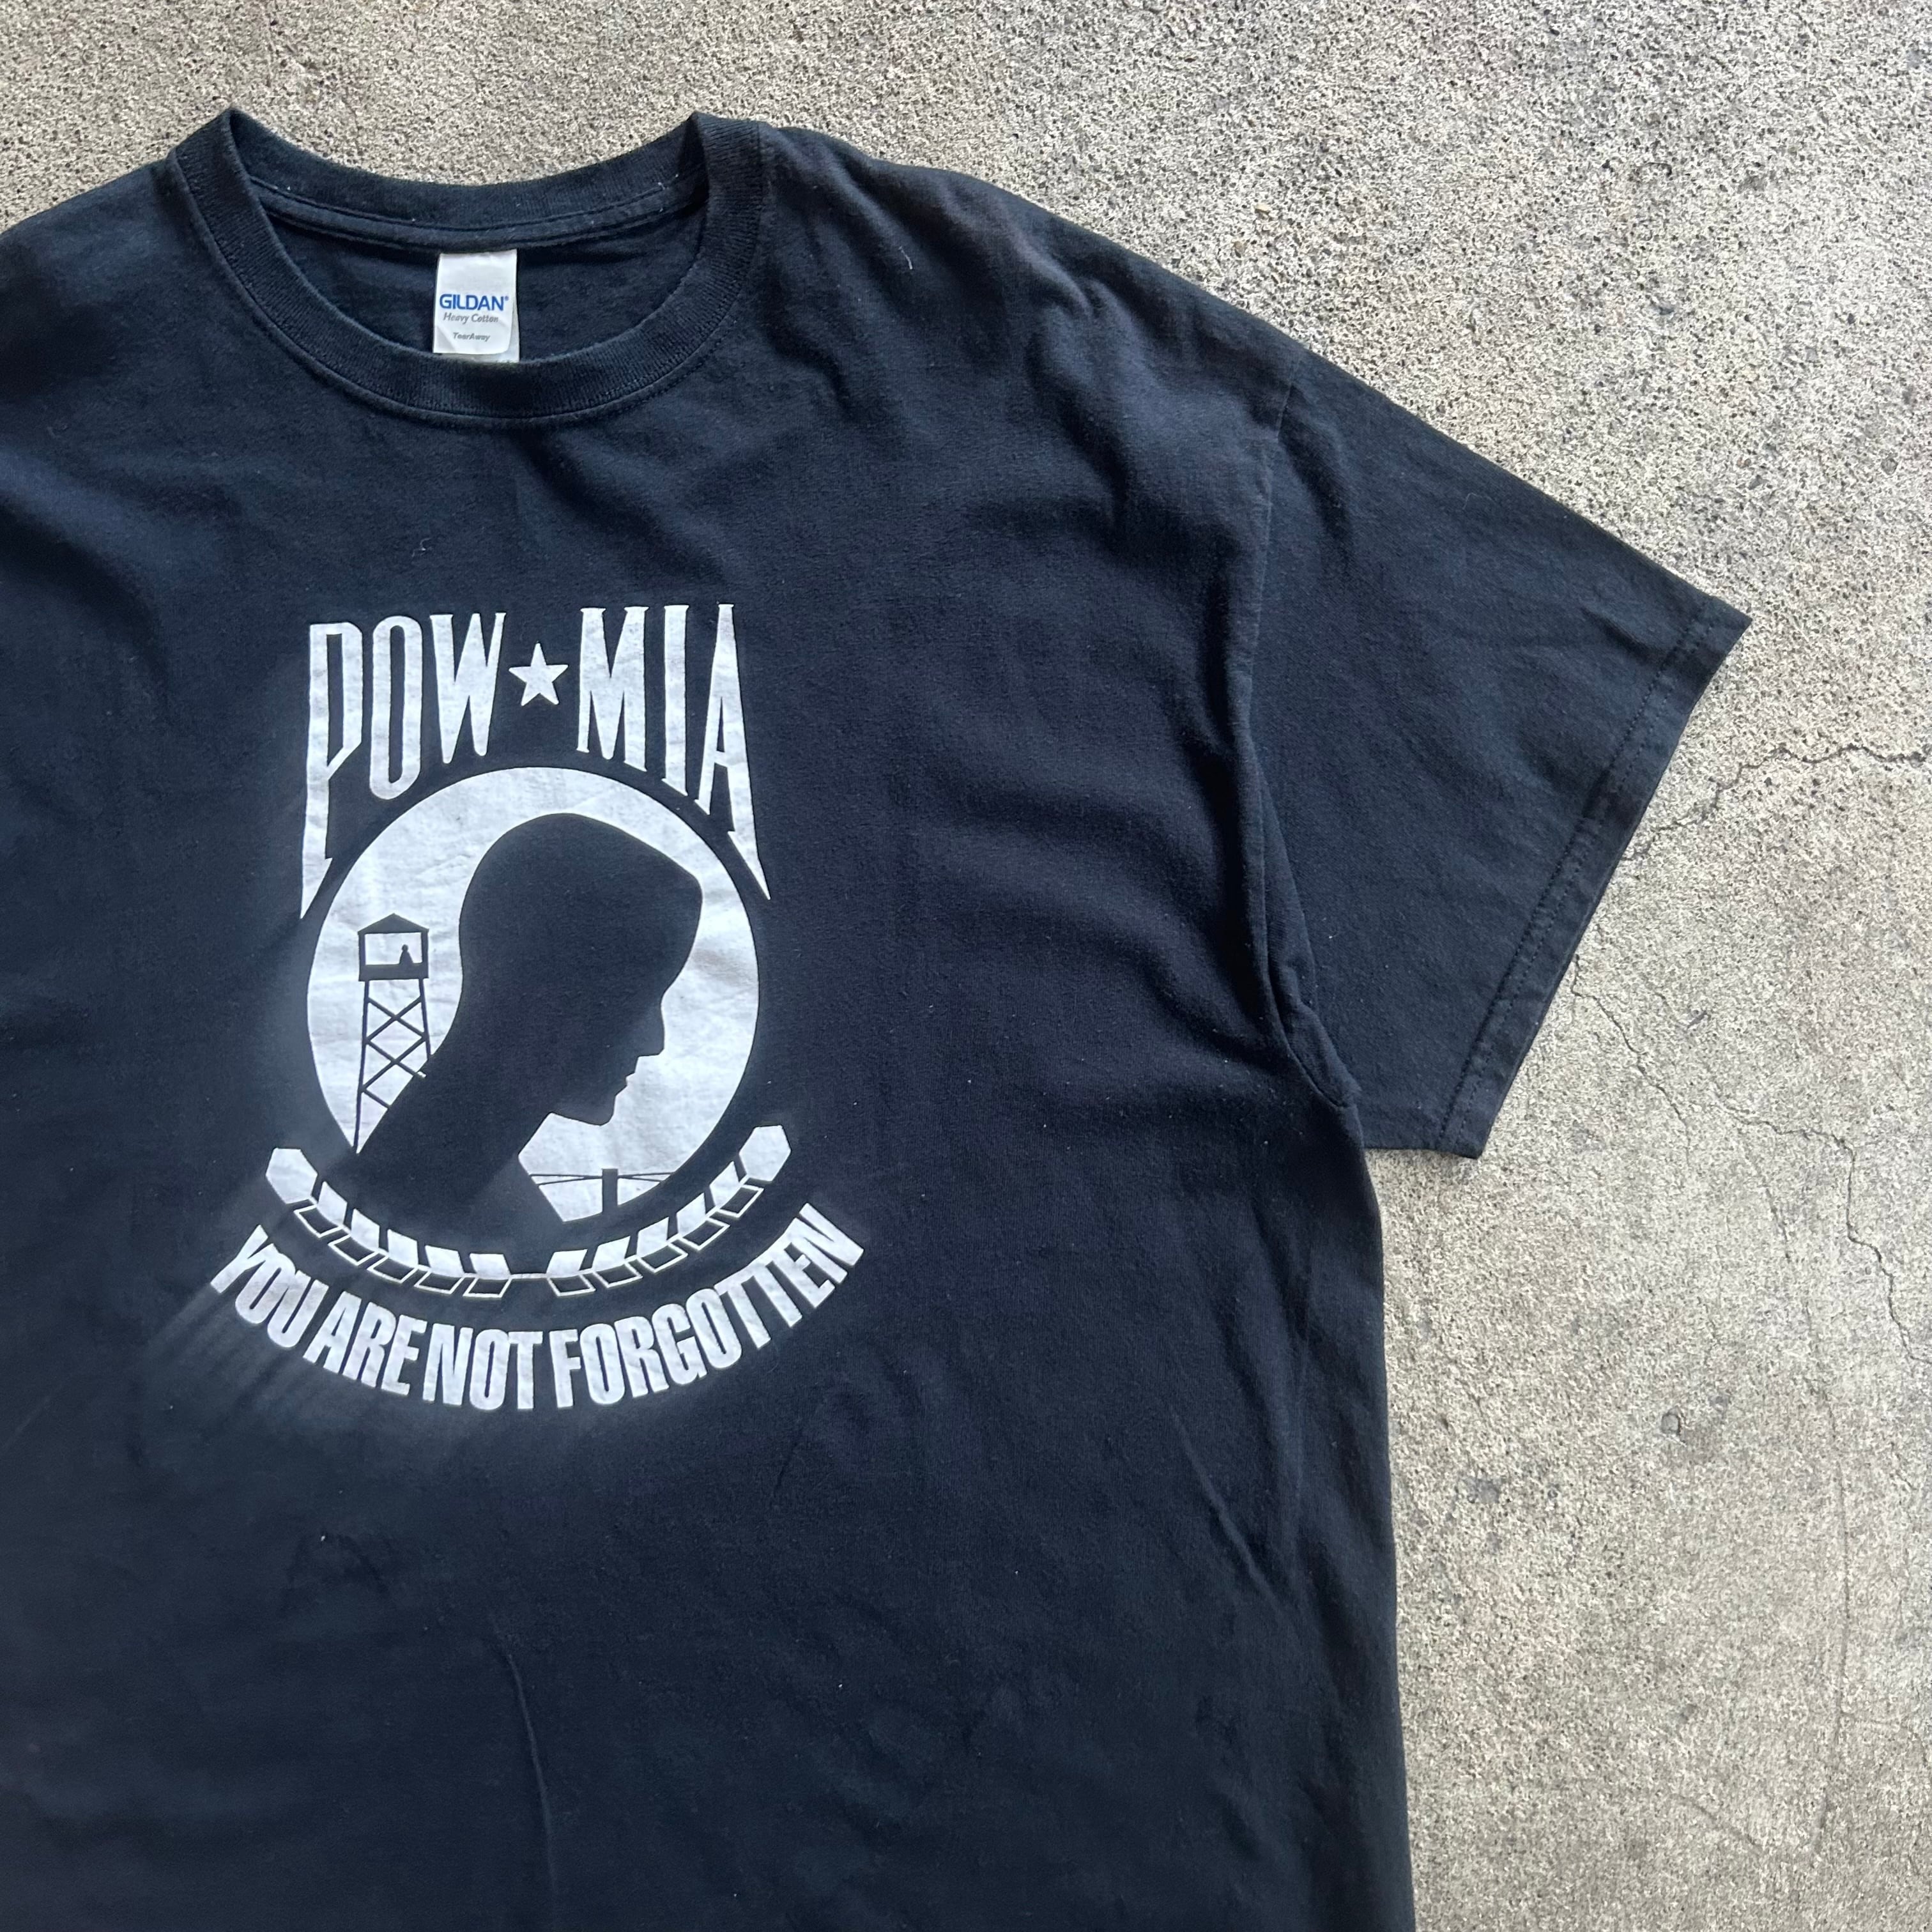 POW・MIA Tシャツ メッセージ XLサイズ ミリタリーベトナム戦争 #507154 kapre